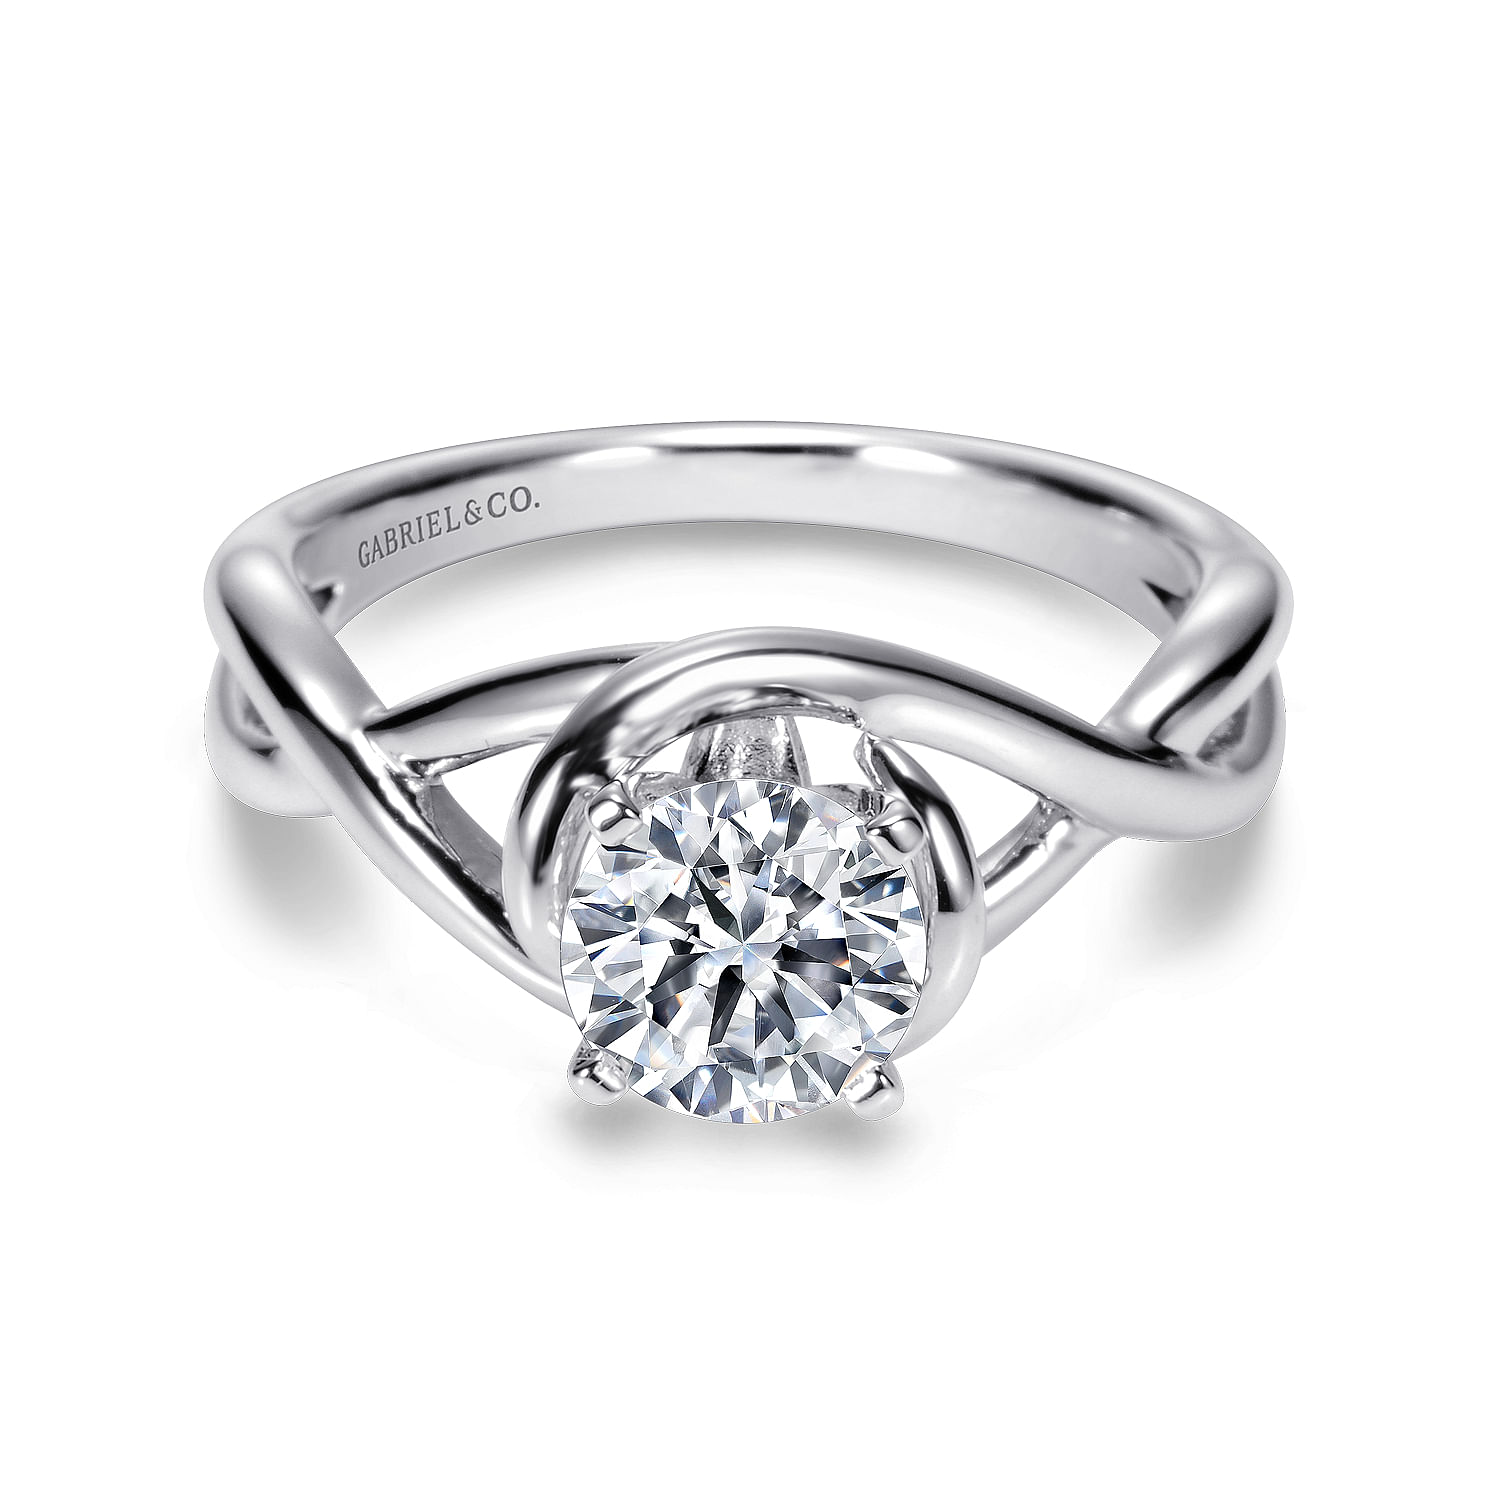 Celine---14K-White-Gold-Round-Twisted-Diamond-Engagement-Ring1